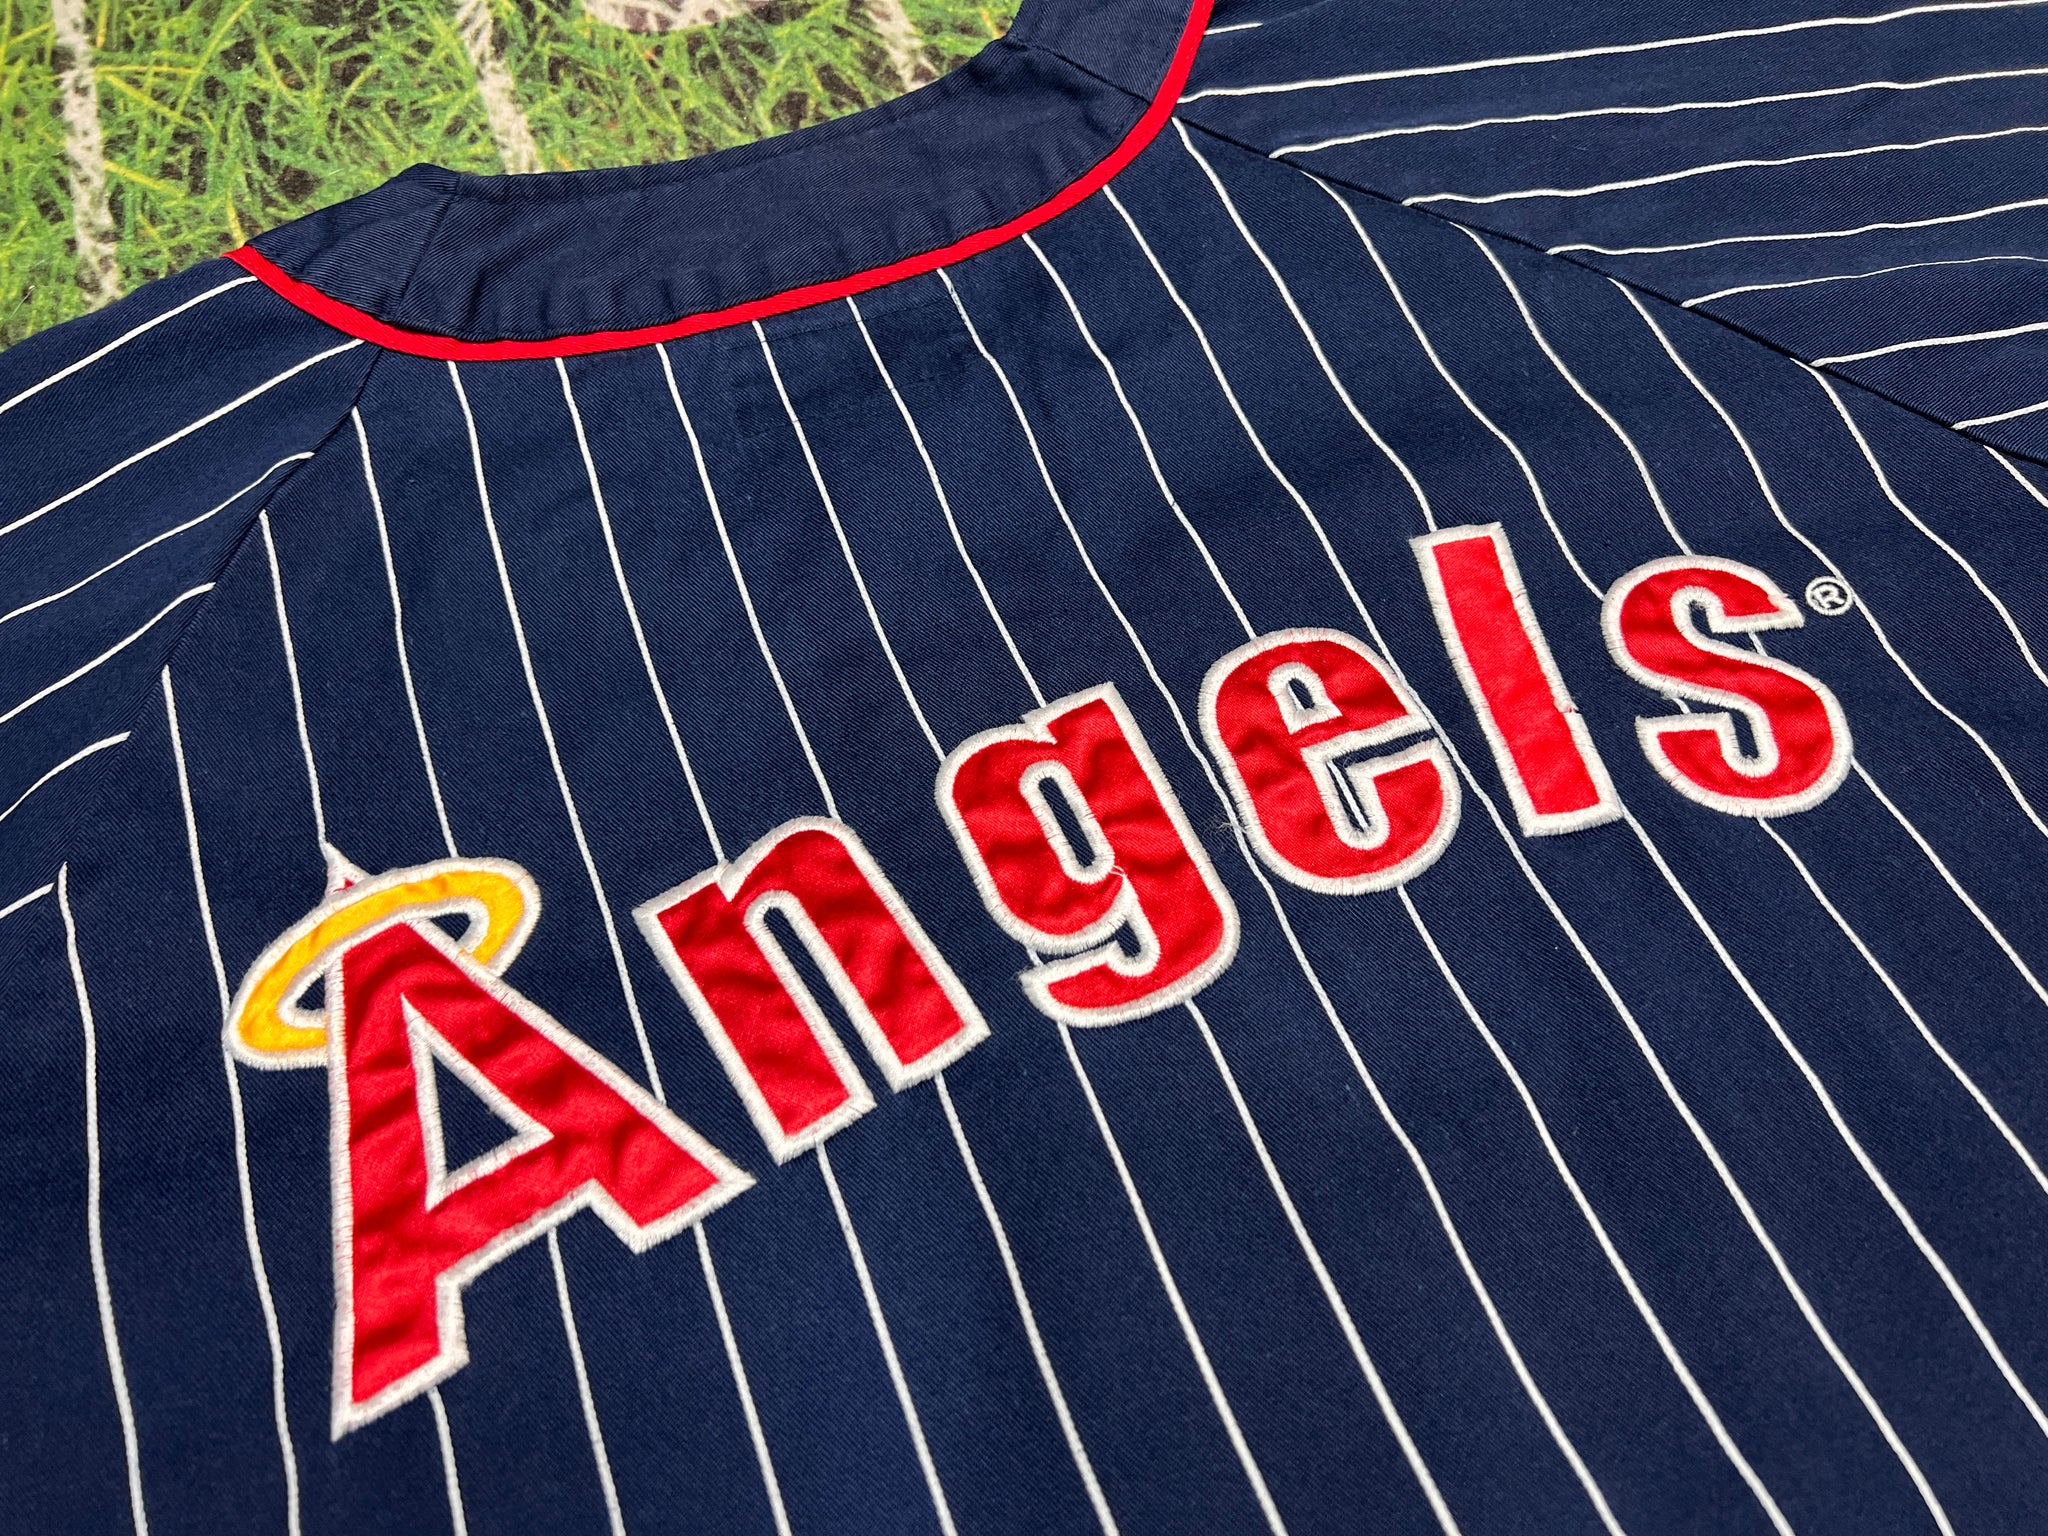 Blue Anaheim Angels MLB Jerseys for sale